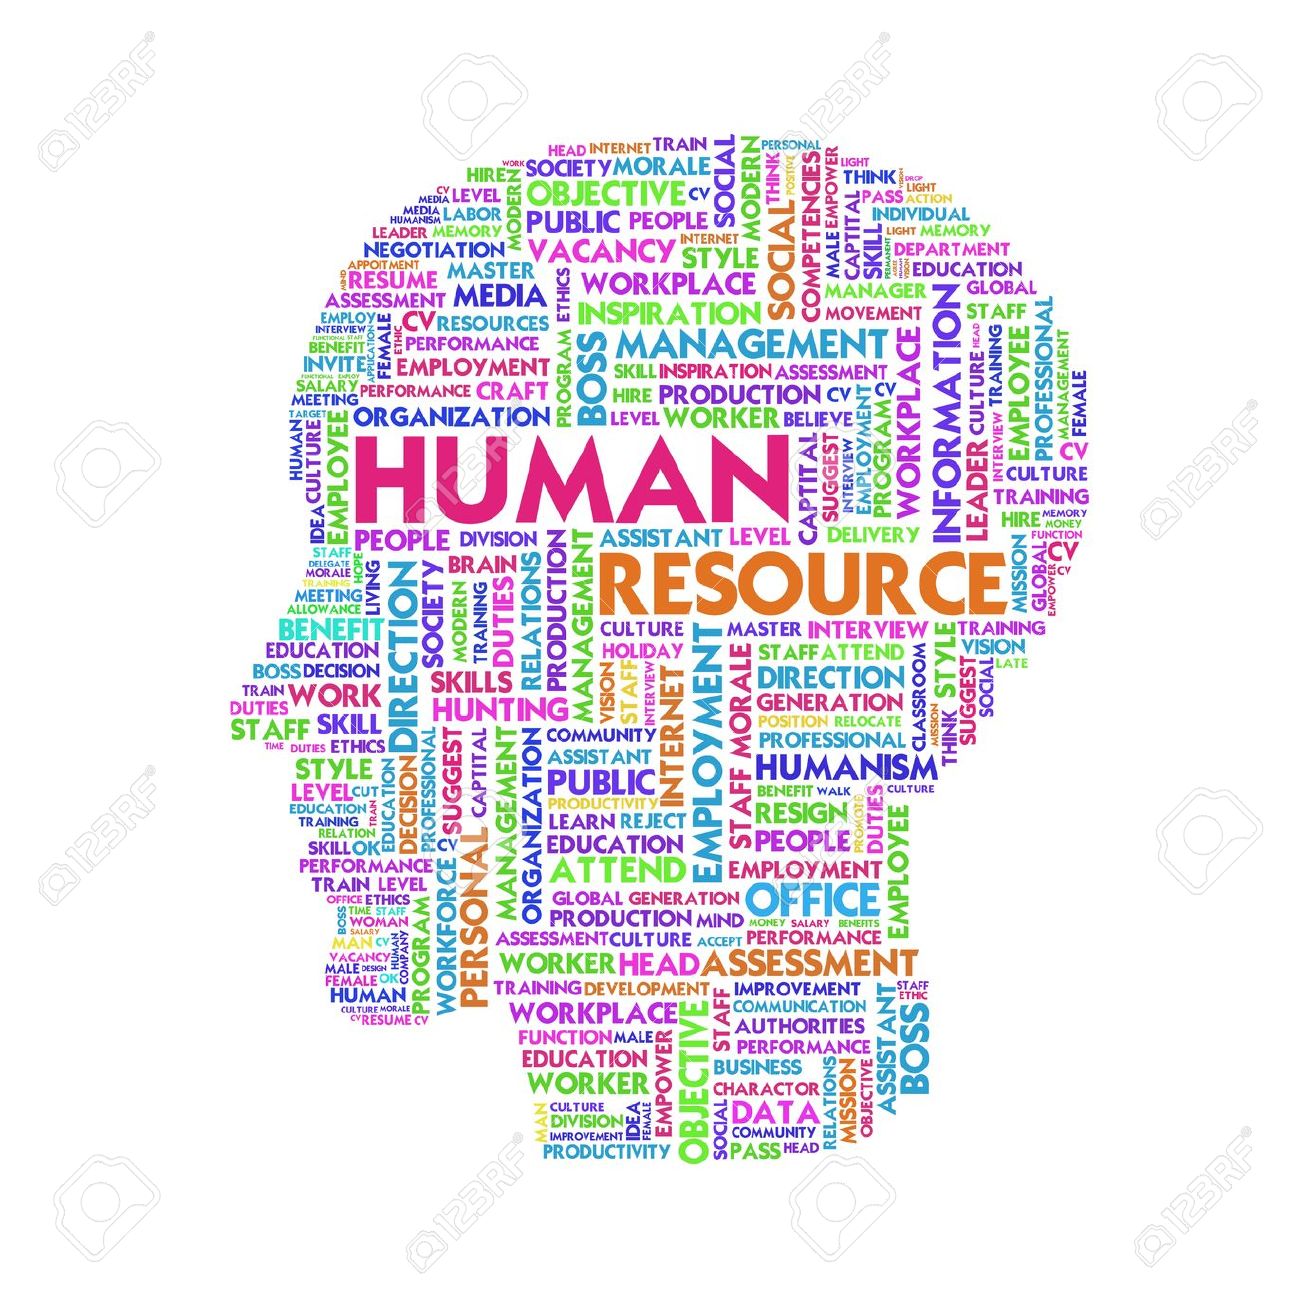 human resources images clip art.